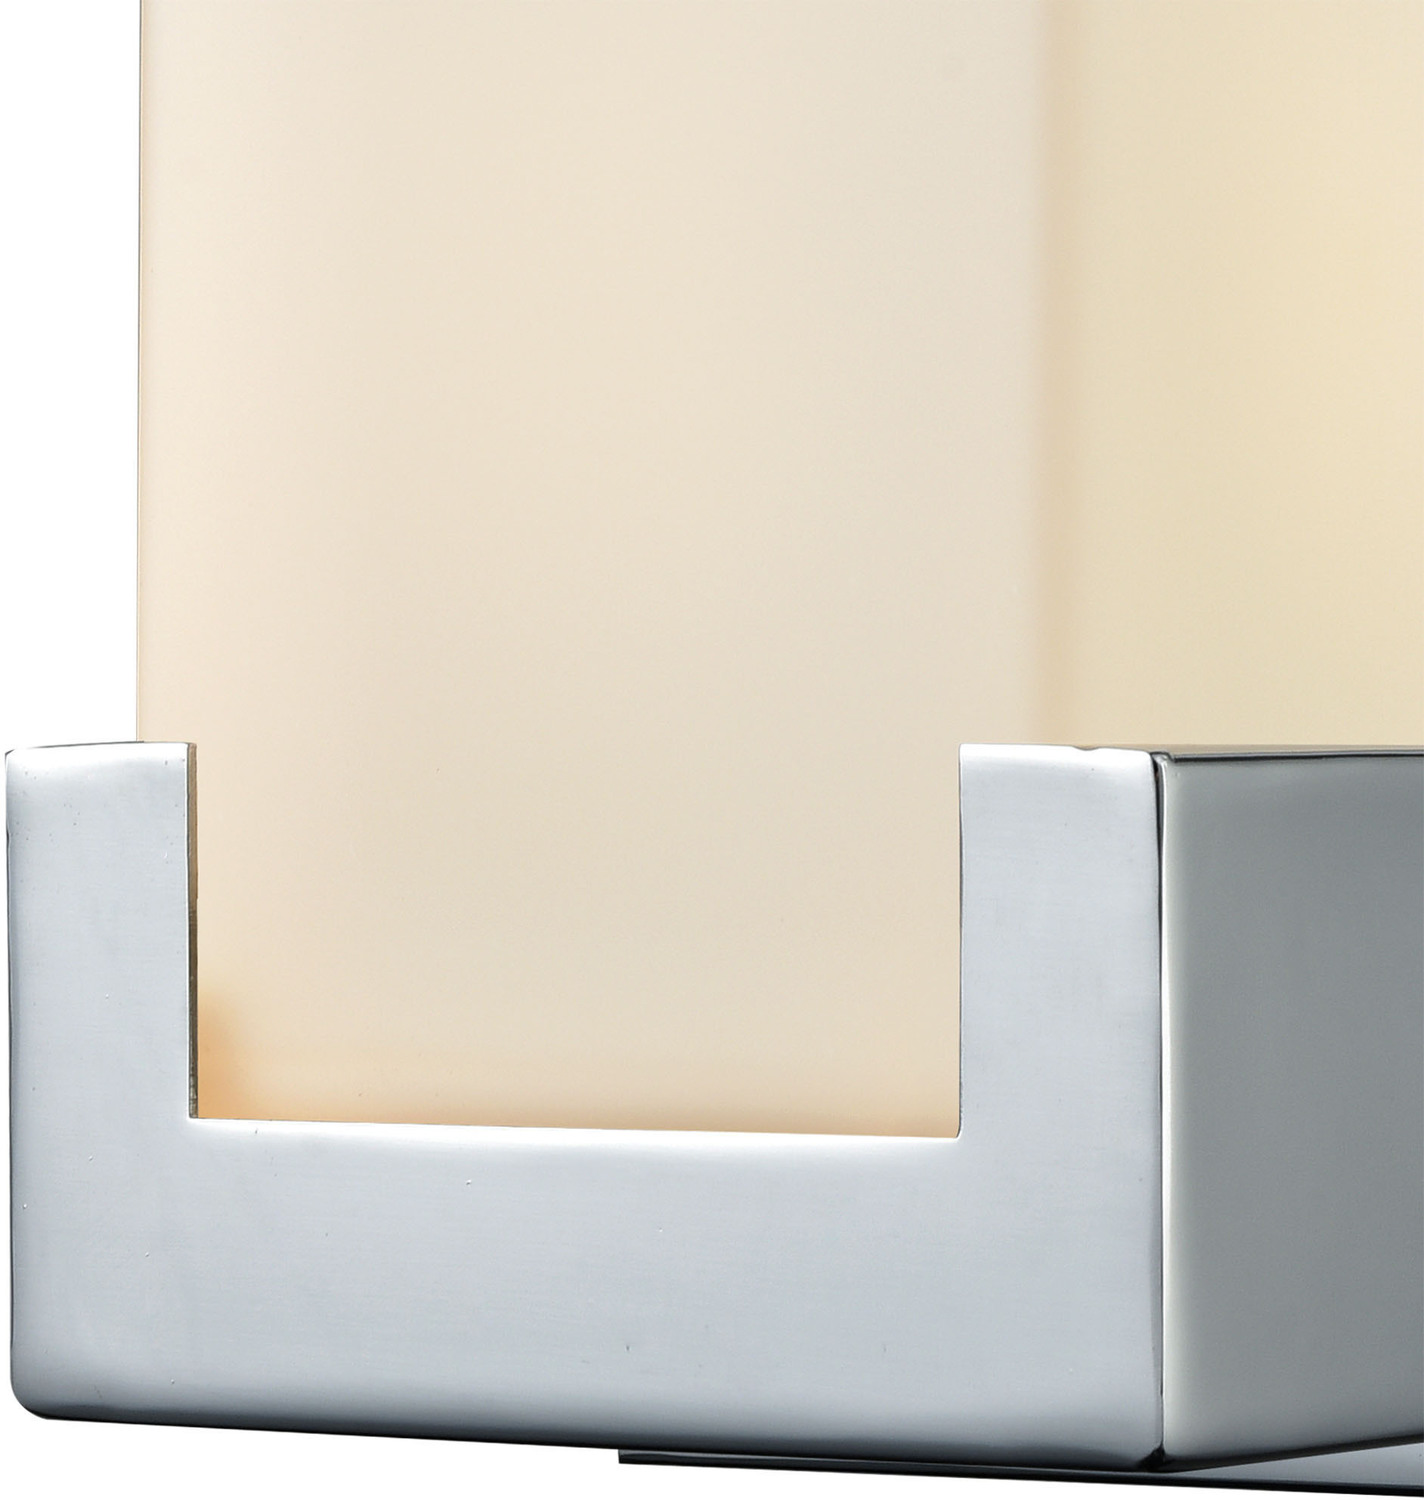 vanity spotlights ELK Lighting Vanity Light Polished Chrome Modern / Contemporary